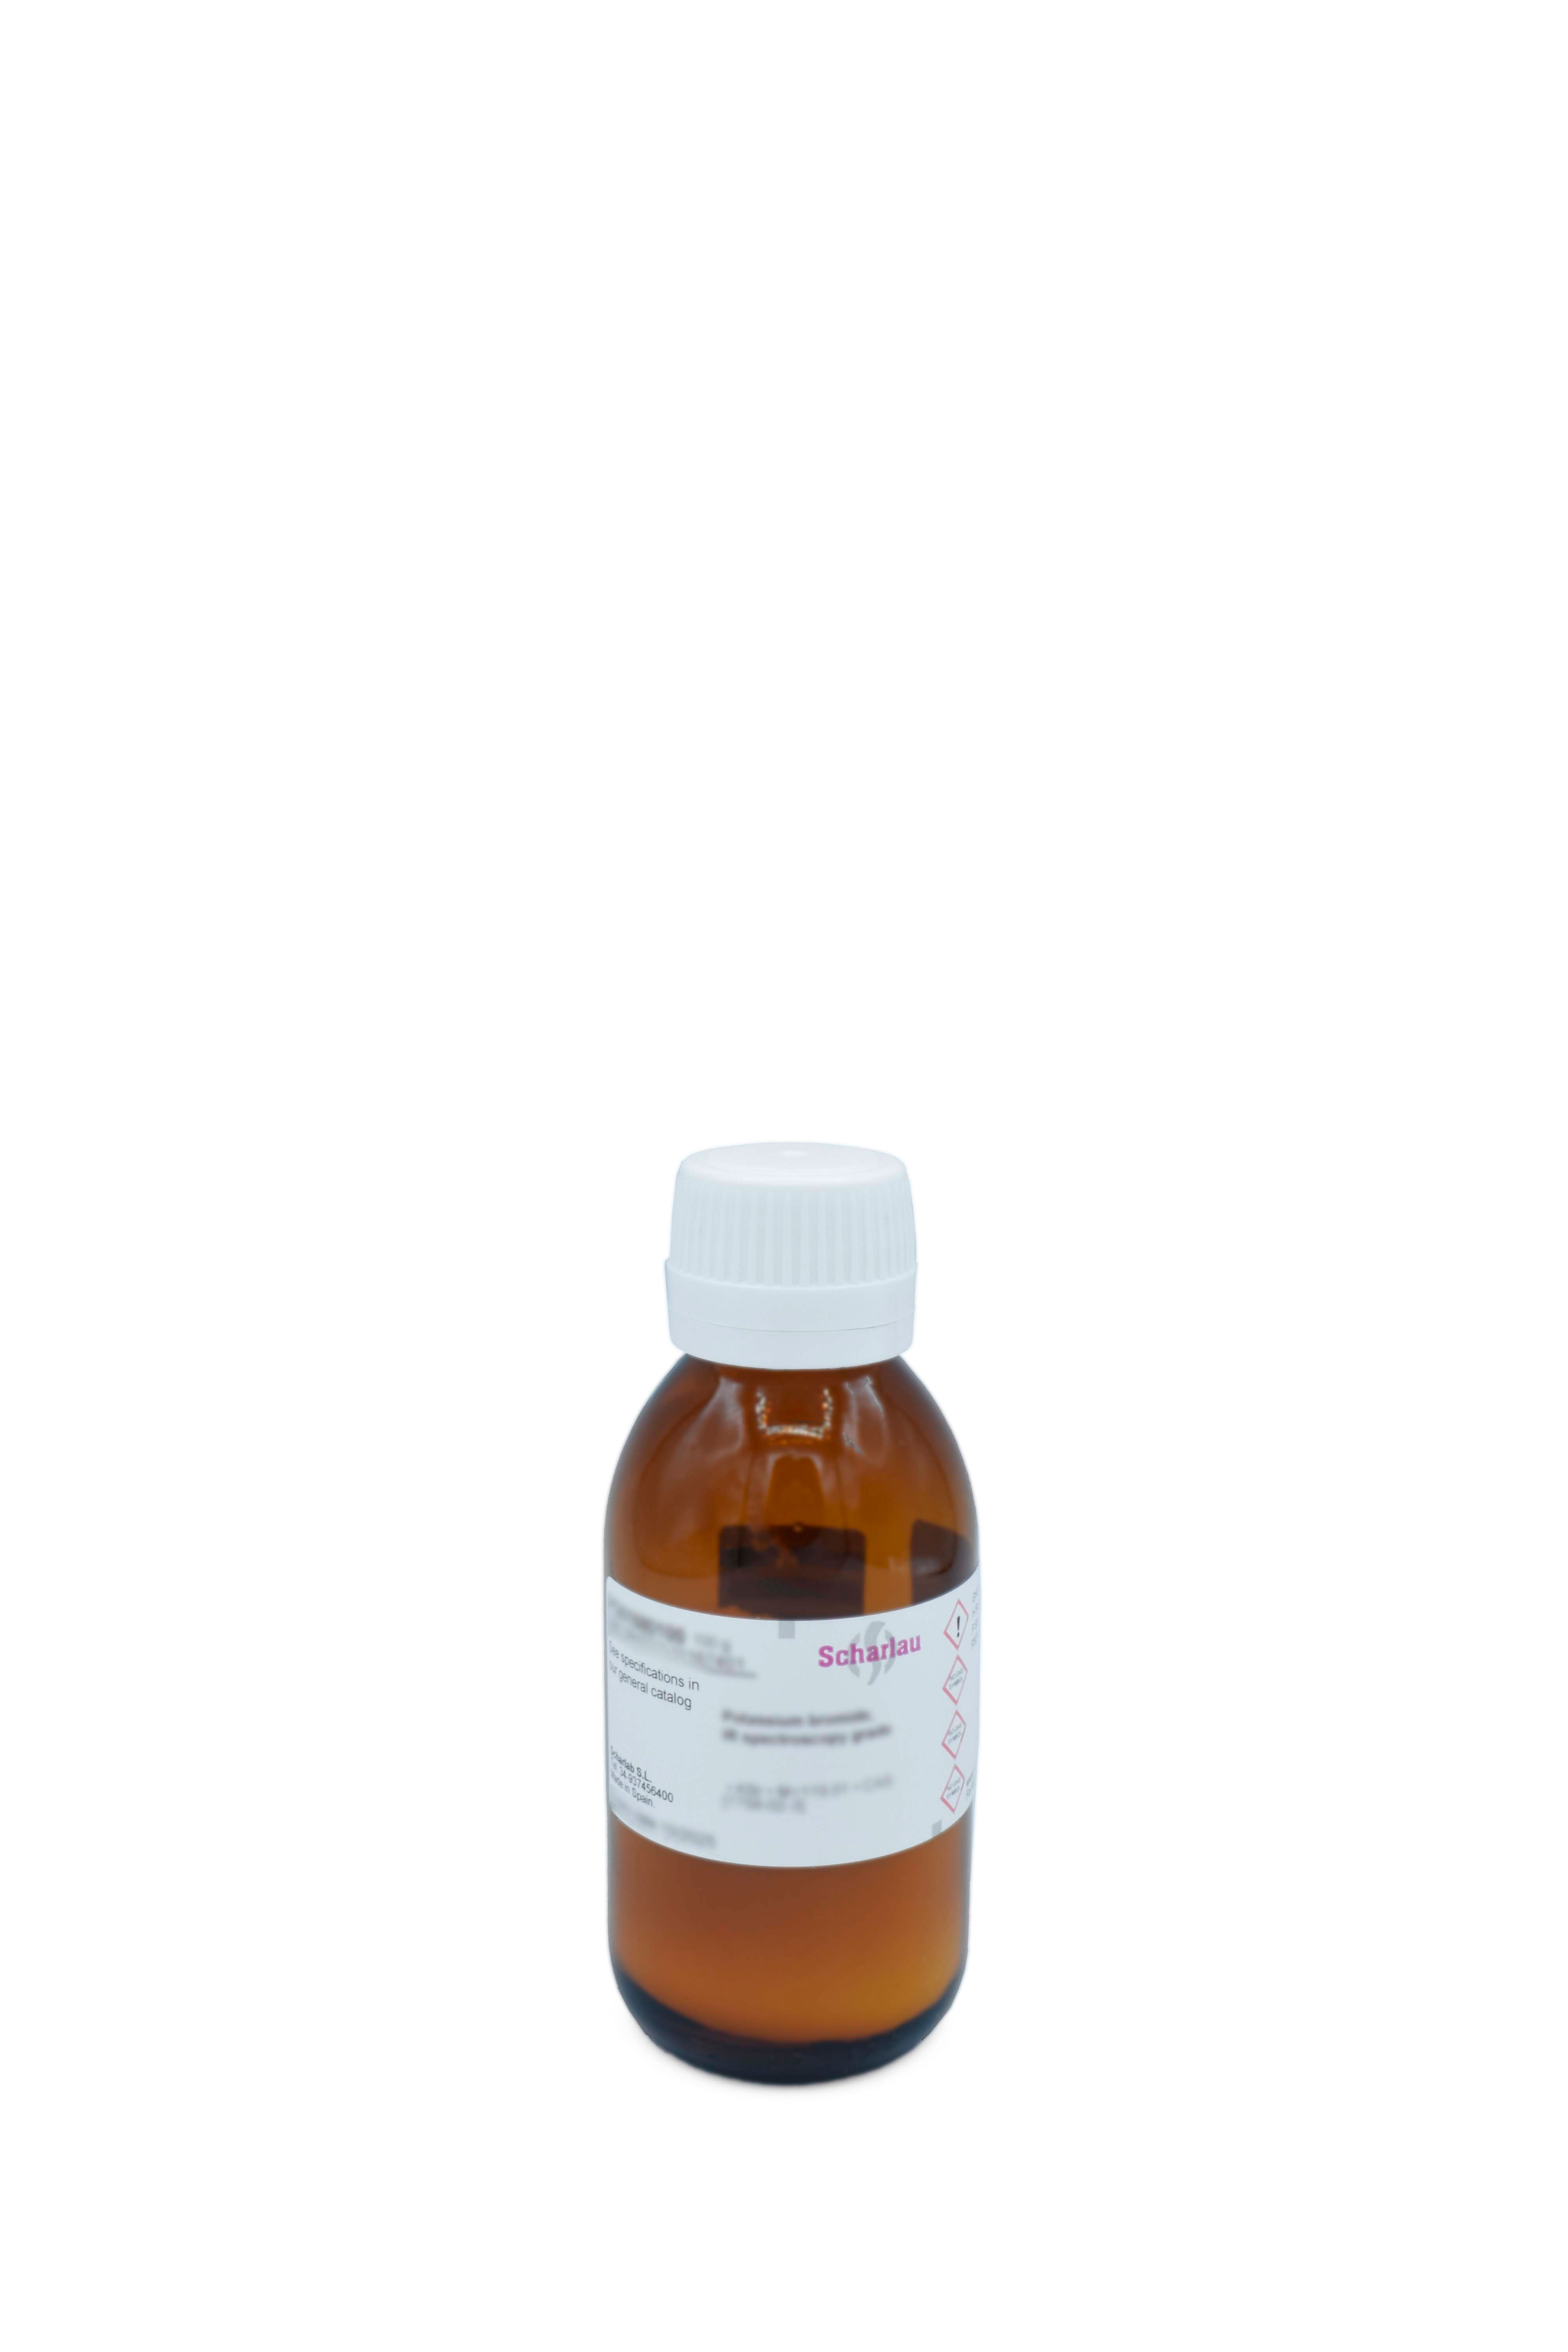 L-Histidina monoclorhidrato monohidrato, Pharmpur®, Ph Eur, BP